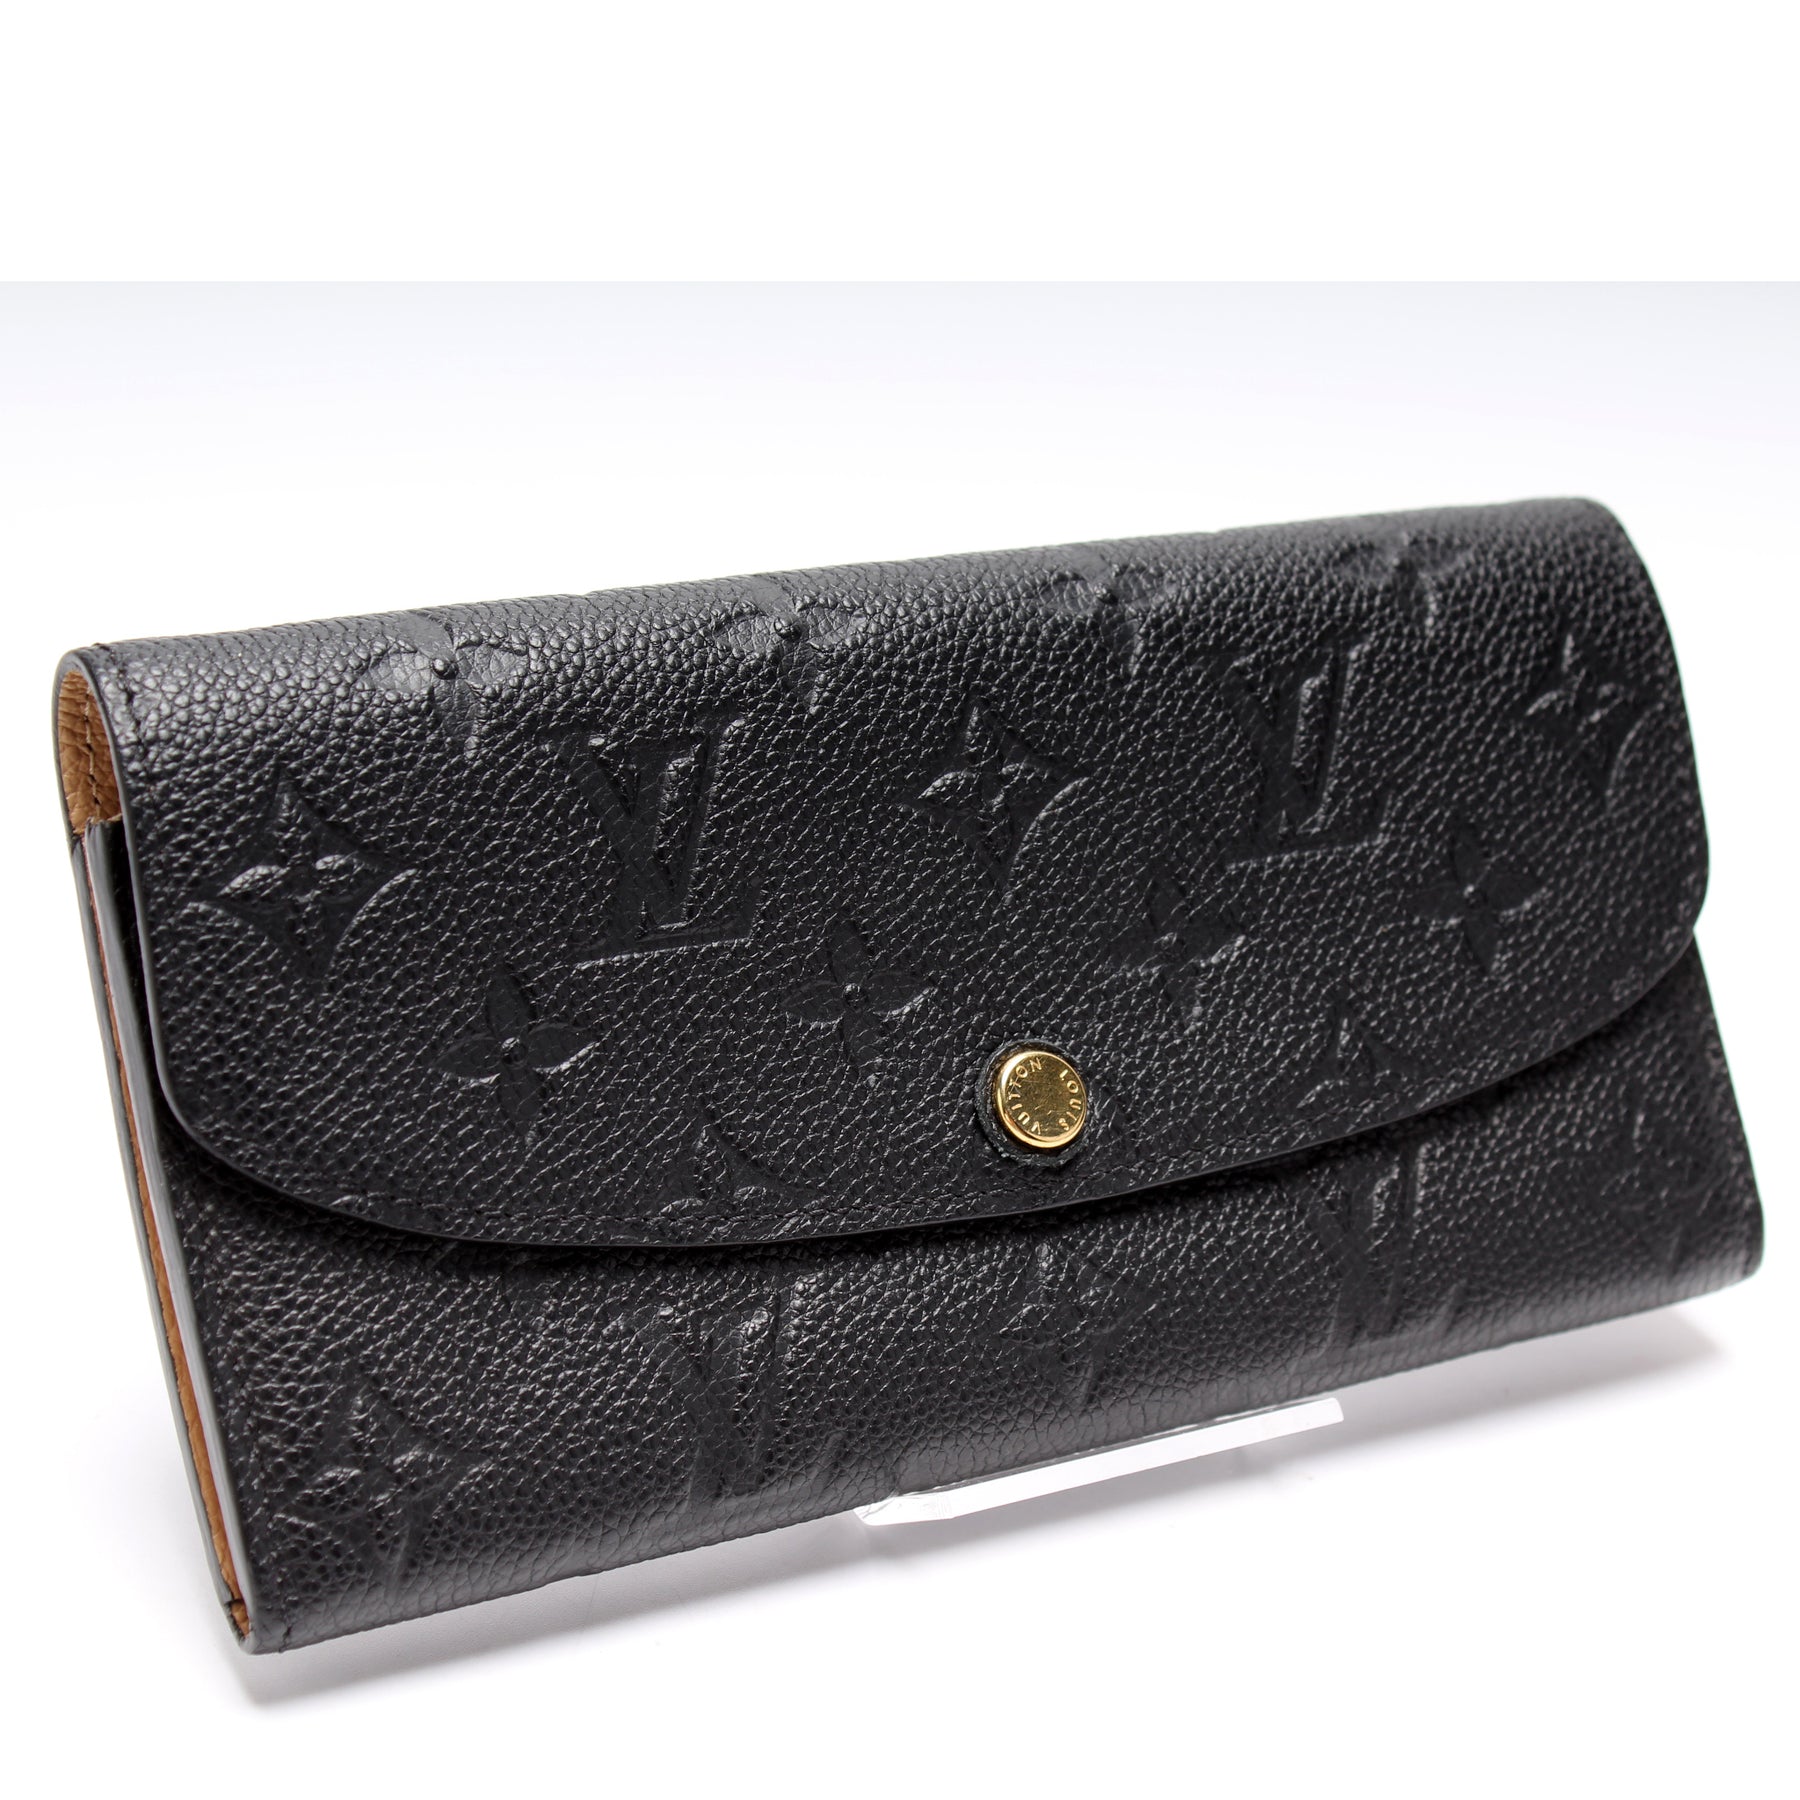 LV Louis Vuitton Emilie wallet in Black Monogram Empreinte Leather